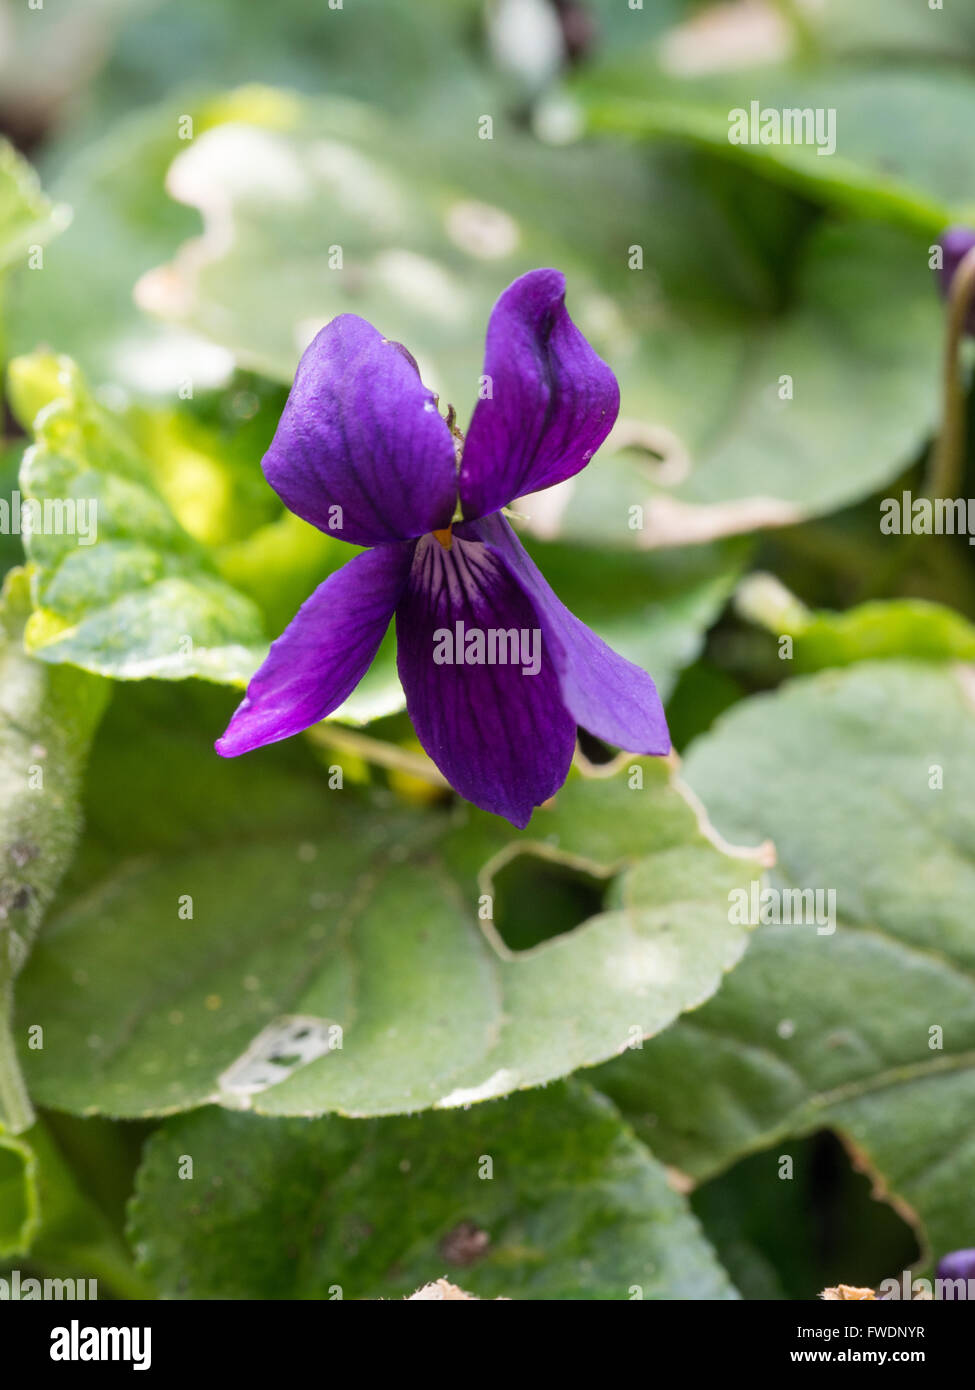 Viola odorata 'Queen Charlotte' flower Stock Photo - Alamy